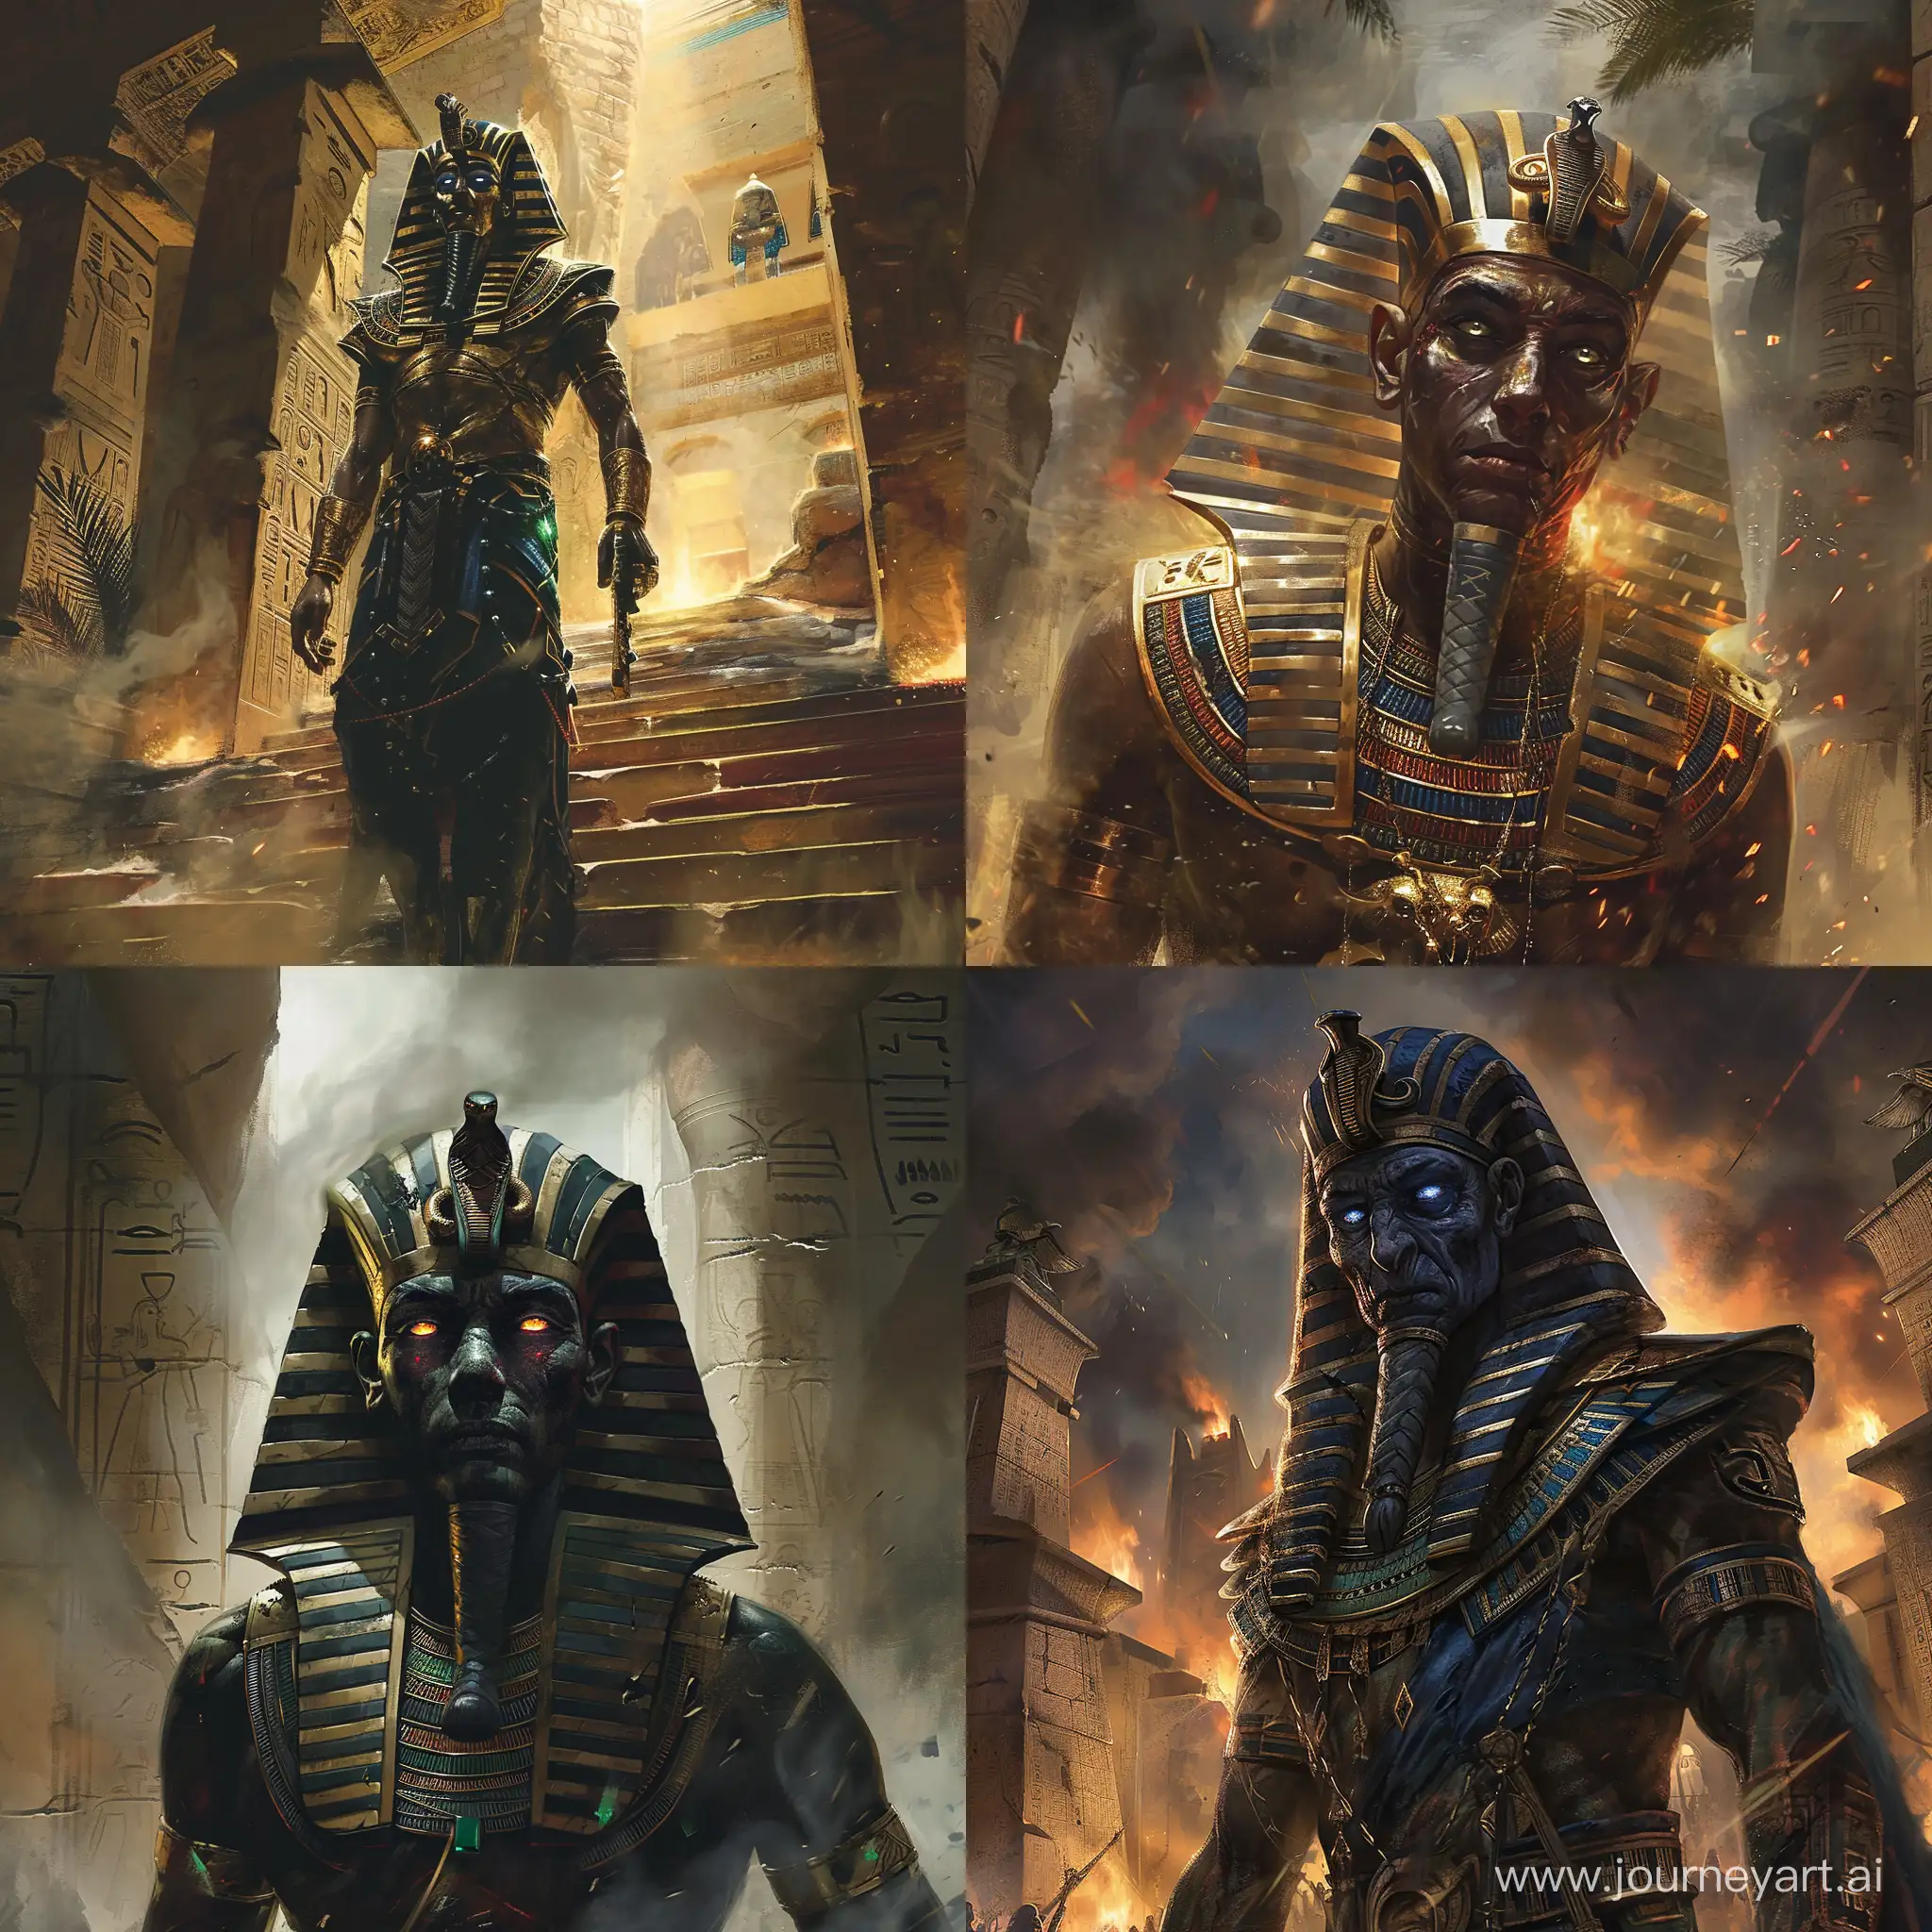 Mysterious-Curse-of-the-Pharaoh-Artwork